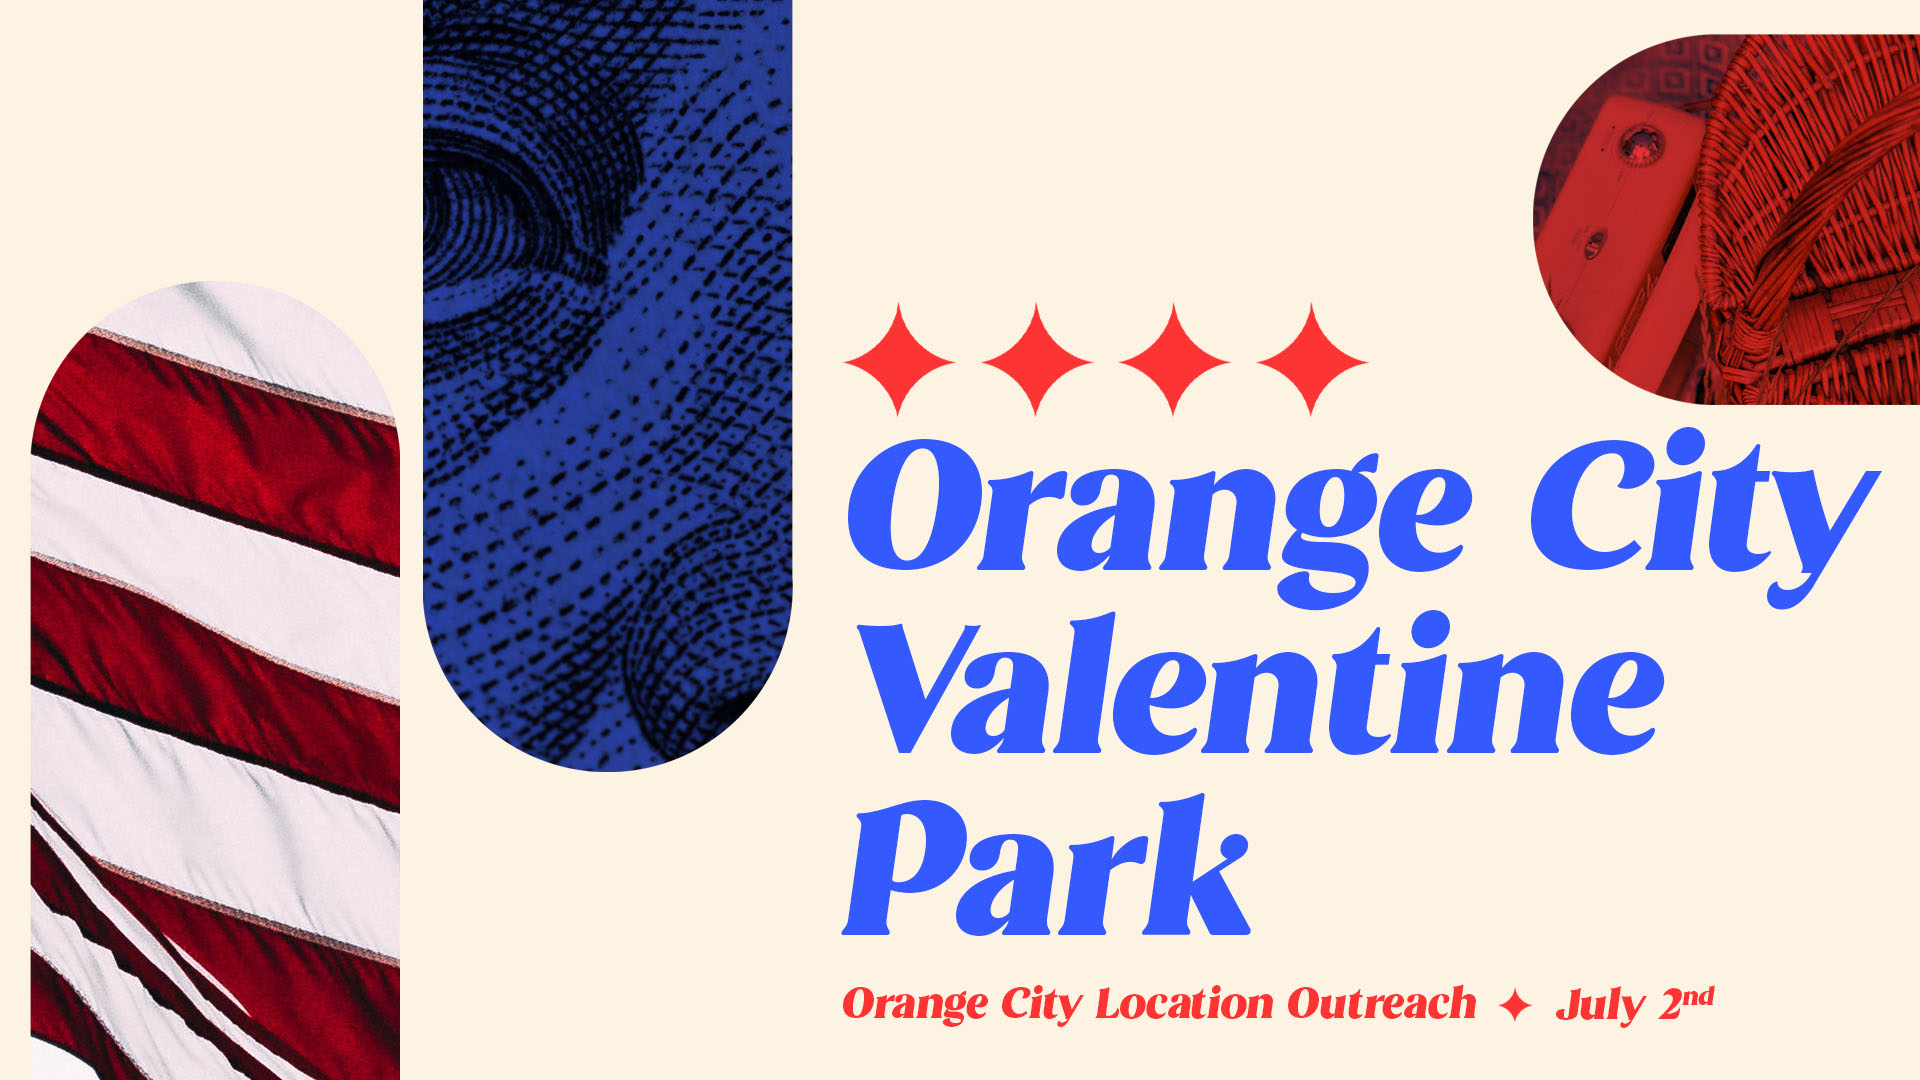 Orange City 4th of July - Valentine Park